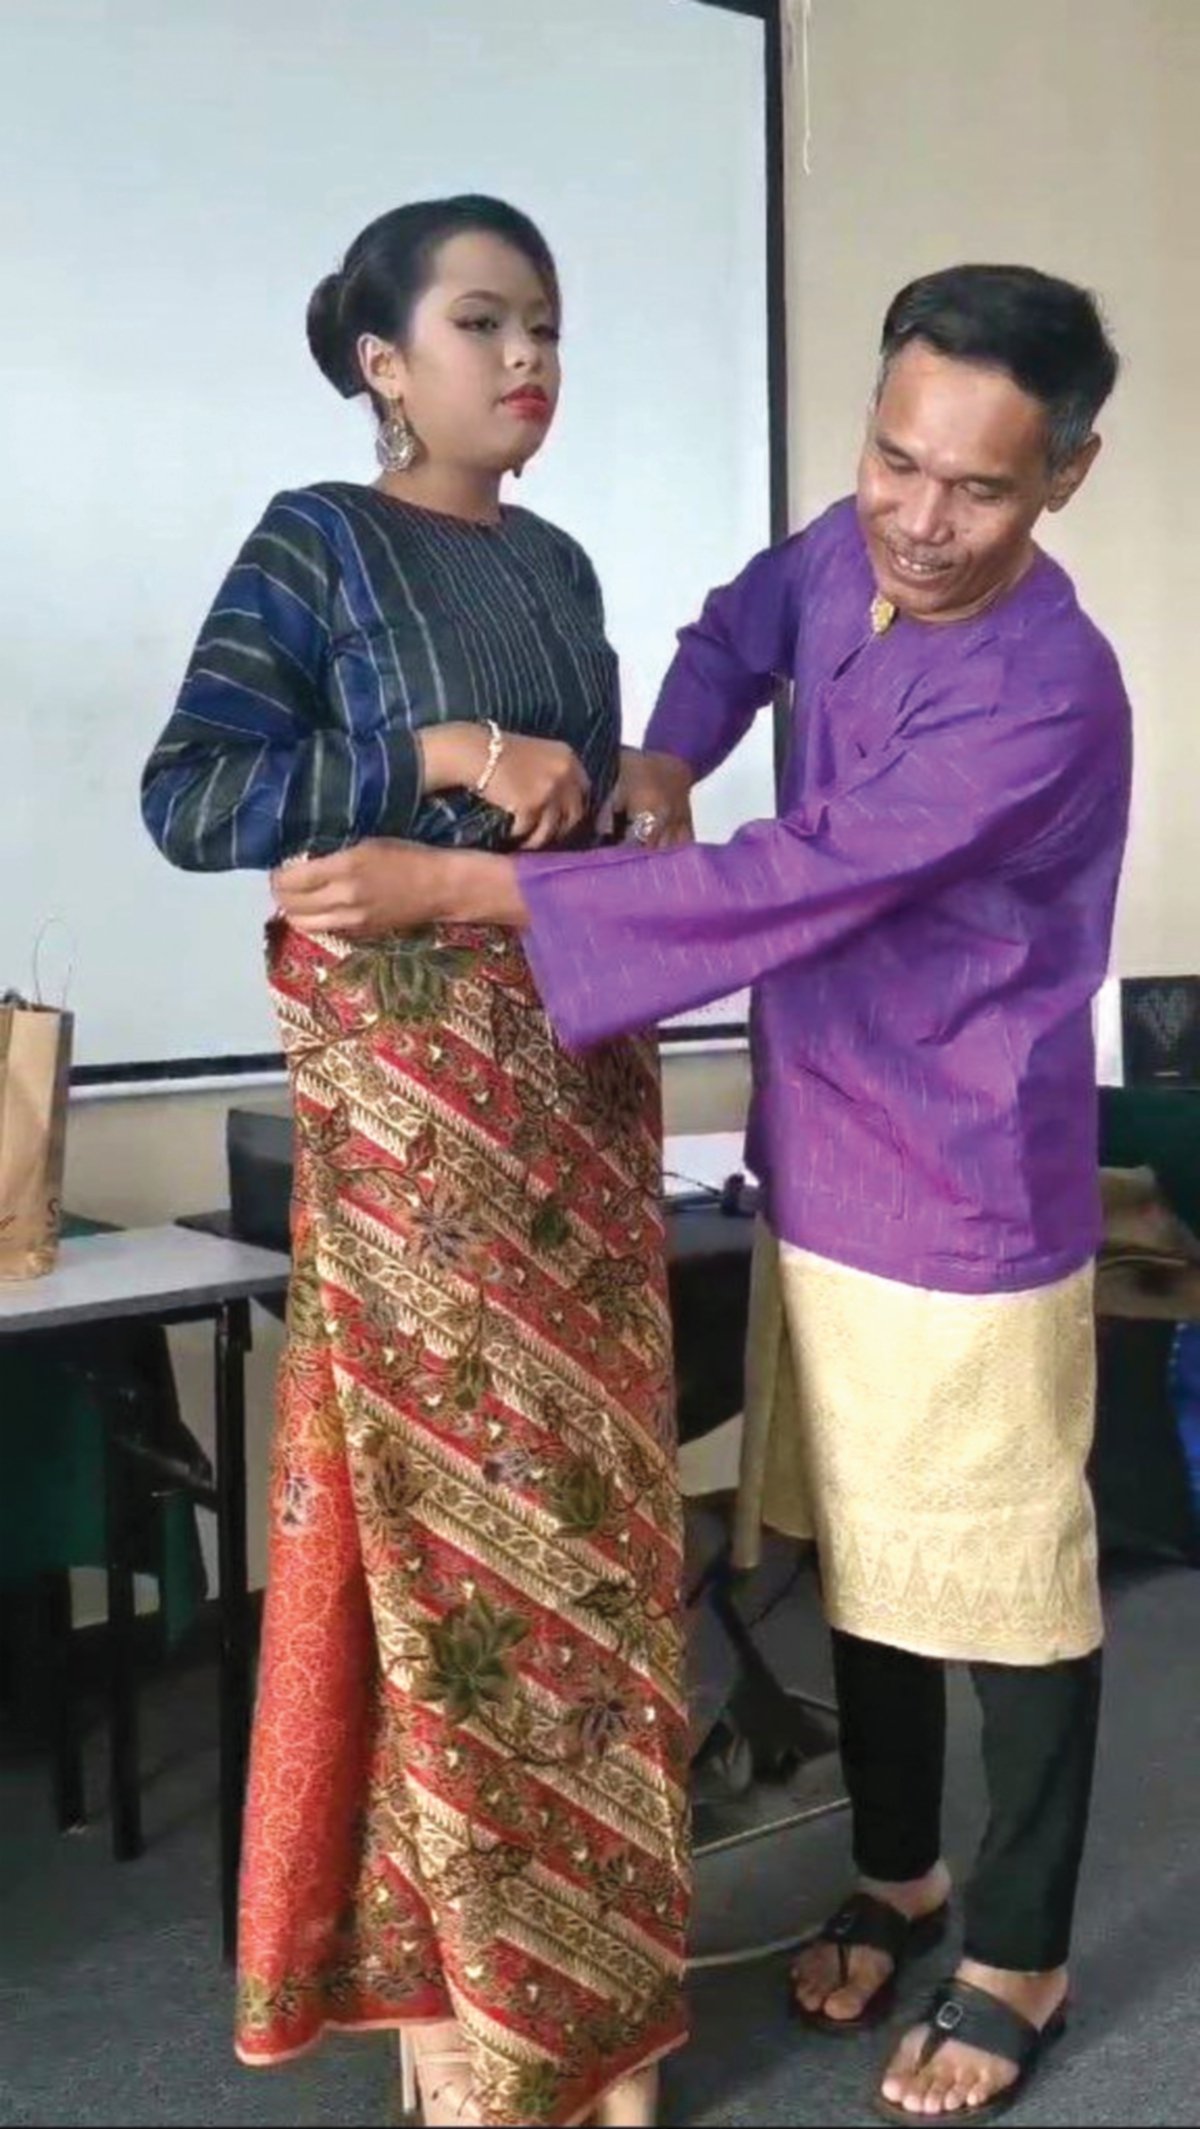 HASSAN melakukan demo kepada peserta mengenai pemakaian kain sarong.